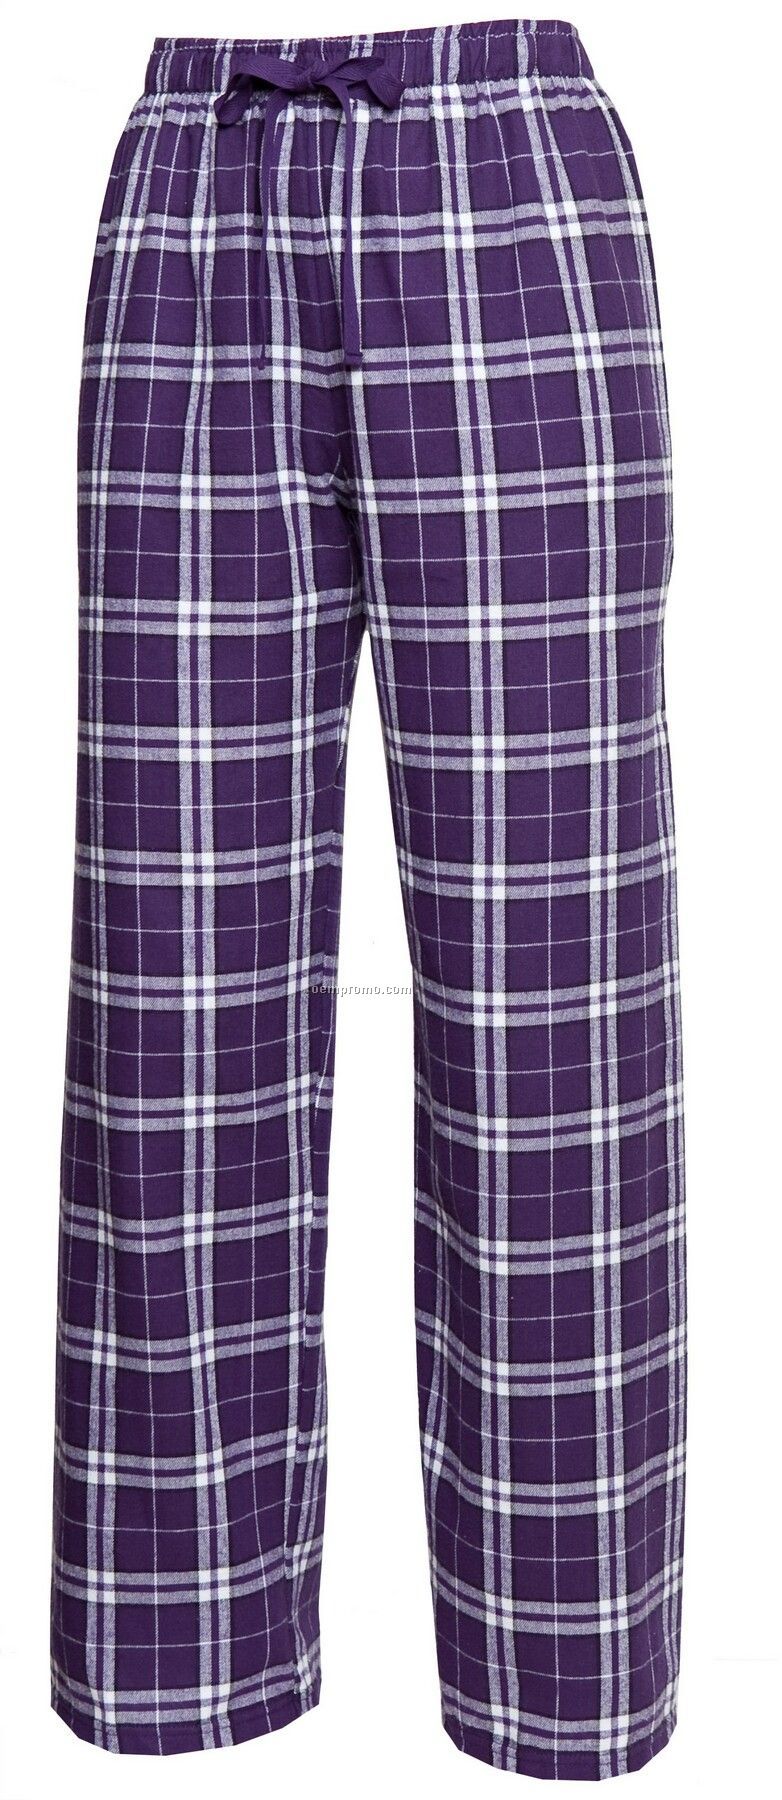 Adult Team Pride Flannel Pant In Purple & White Plaid